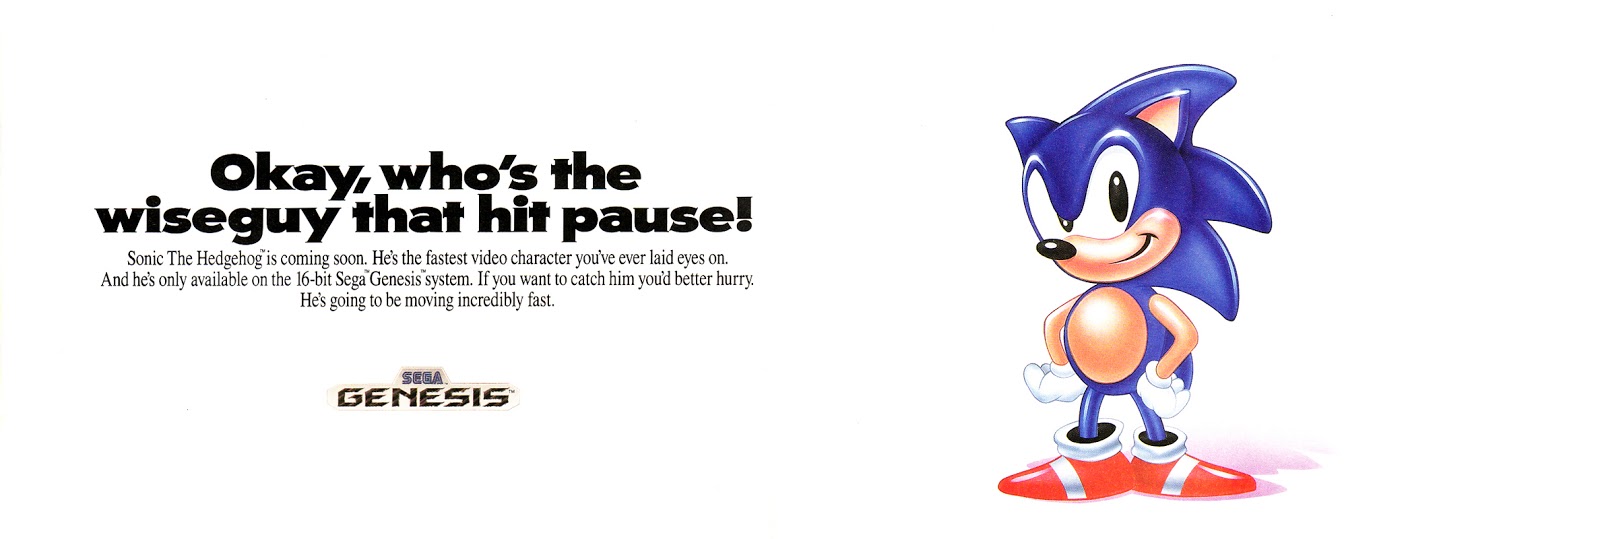 Sonic The Hedgehog Classic  App Price Intelligence by Qonversion